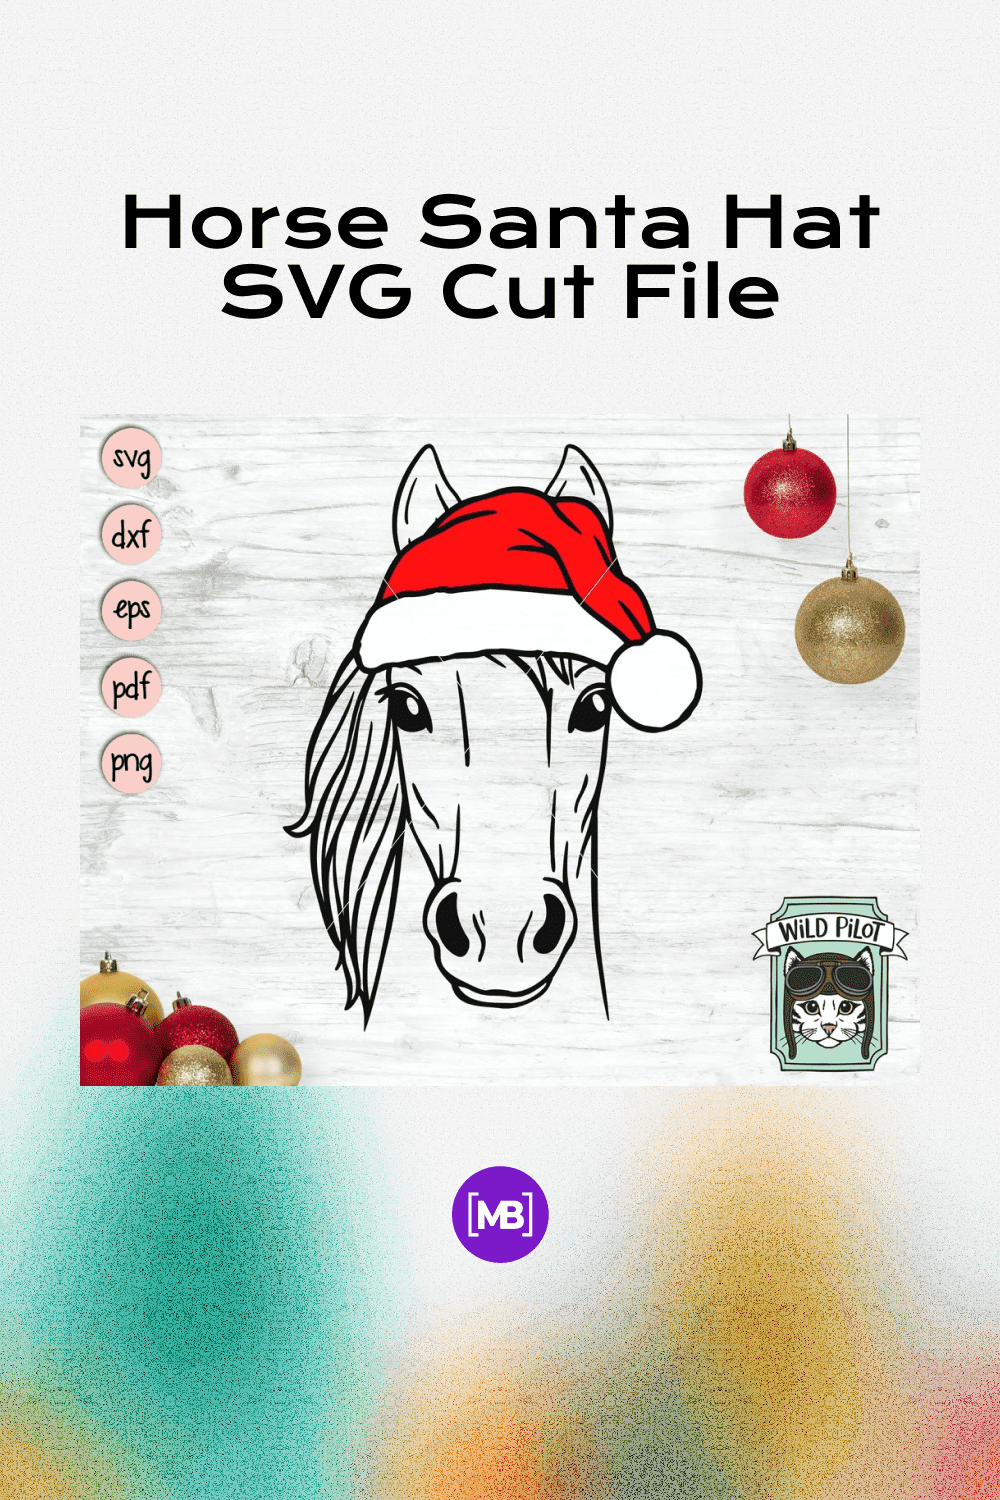 Horse Santa Hat SVG Cut File.